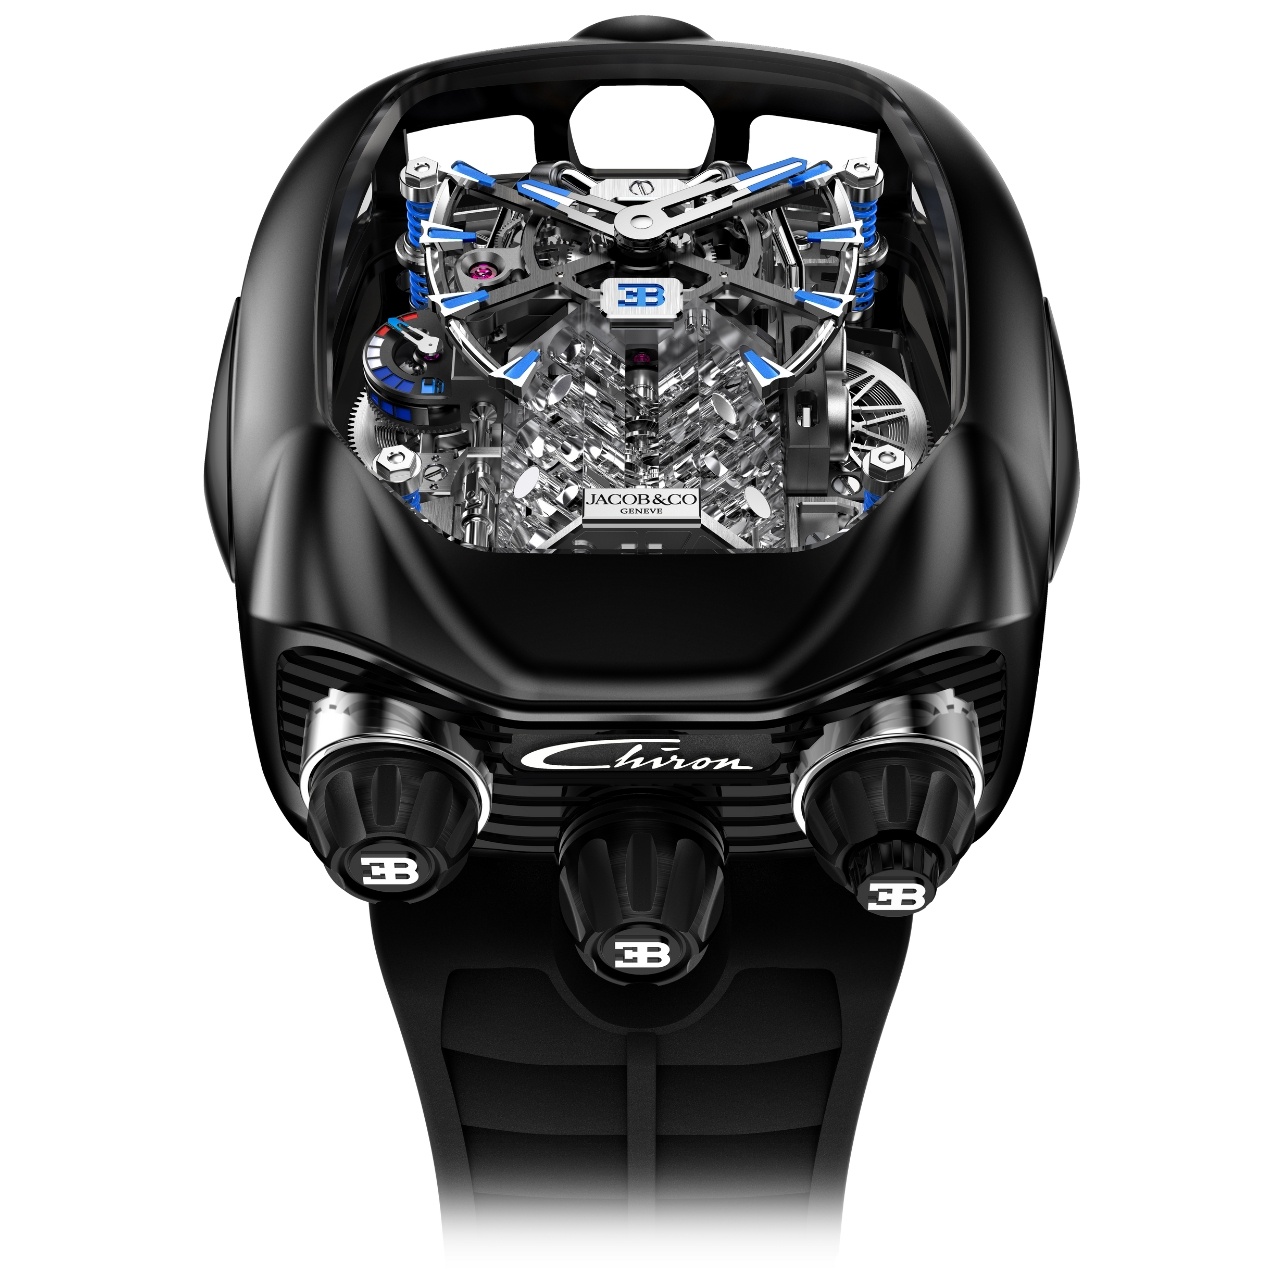 Jacob & Co. Bugatti Chiron Tourbillon watch